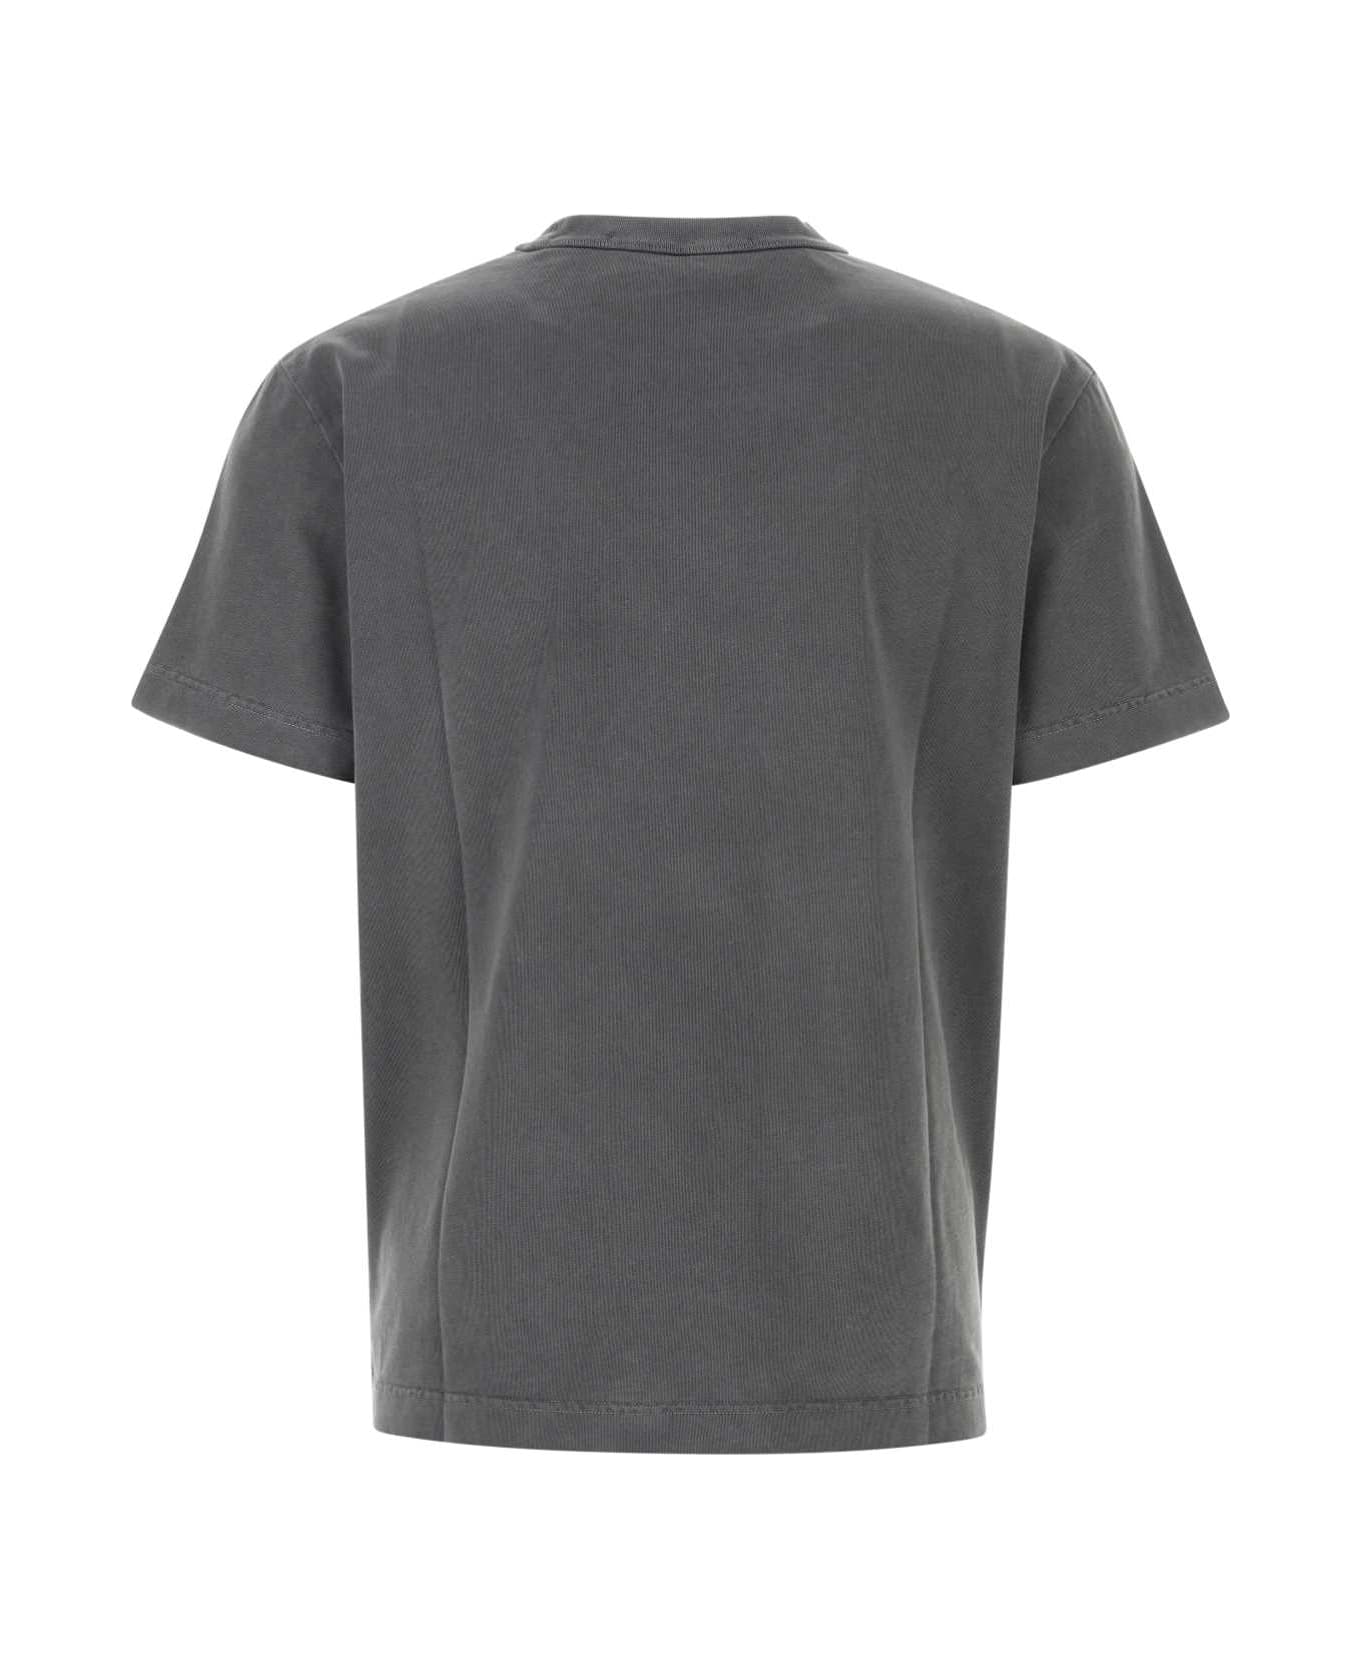 Alexander Wang Anthracite Cotton T-shirt - WASHEDBLACK